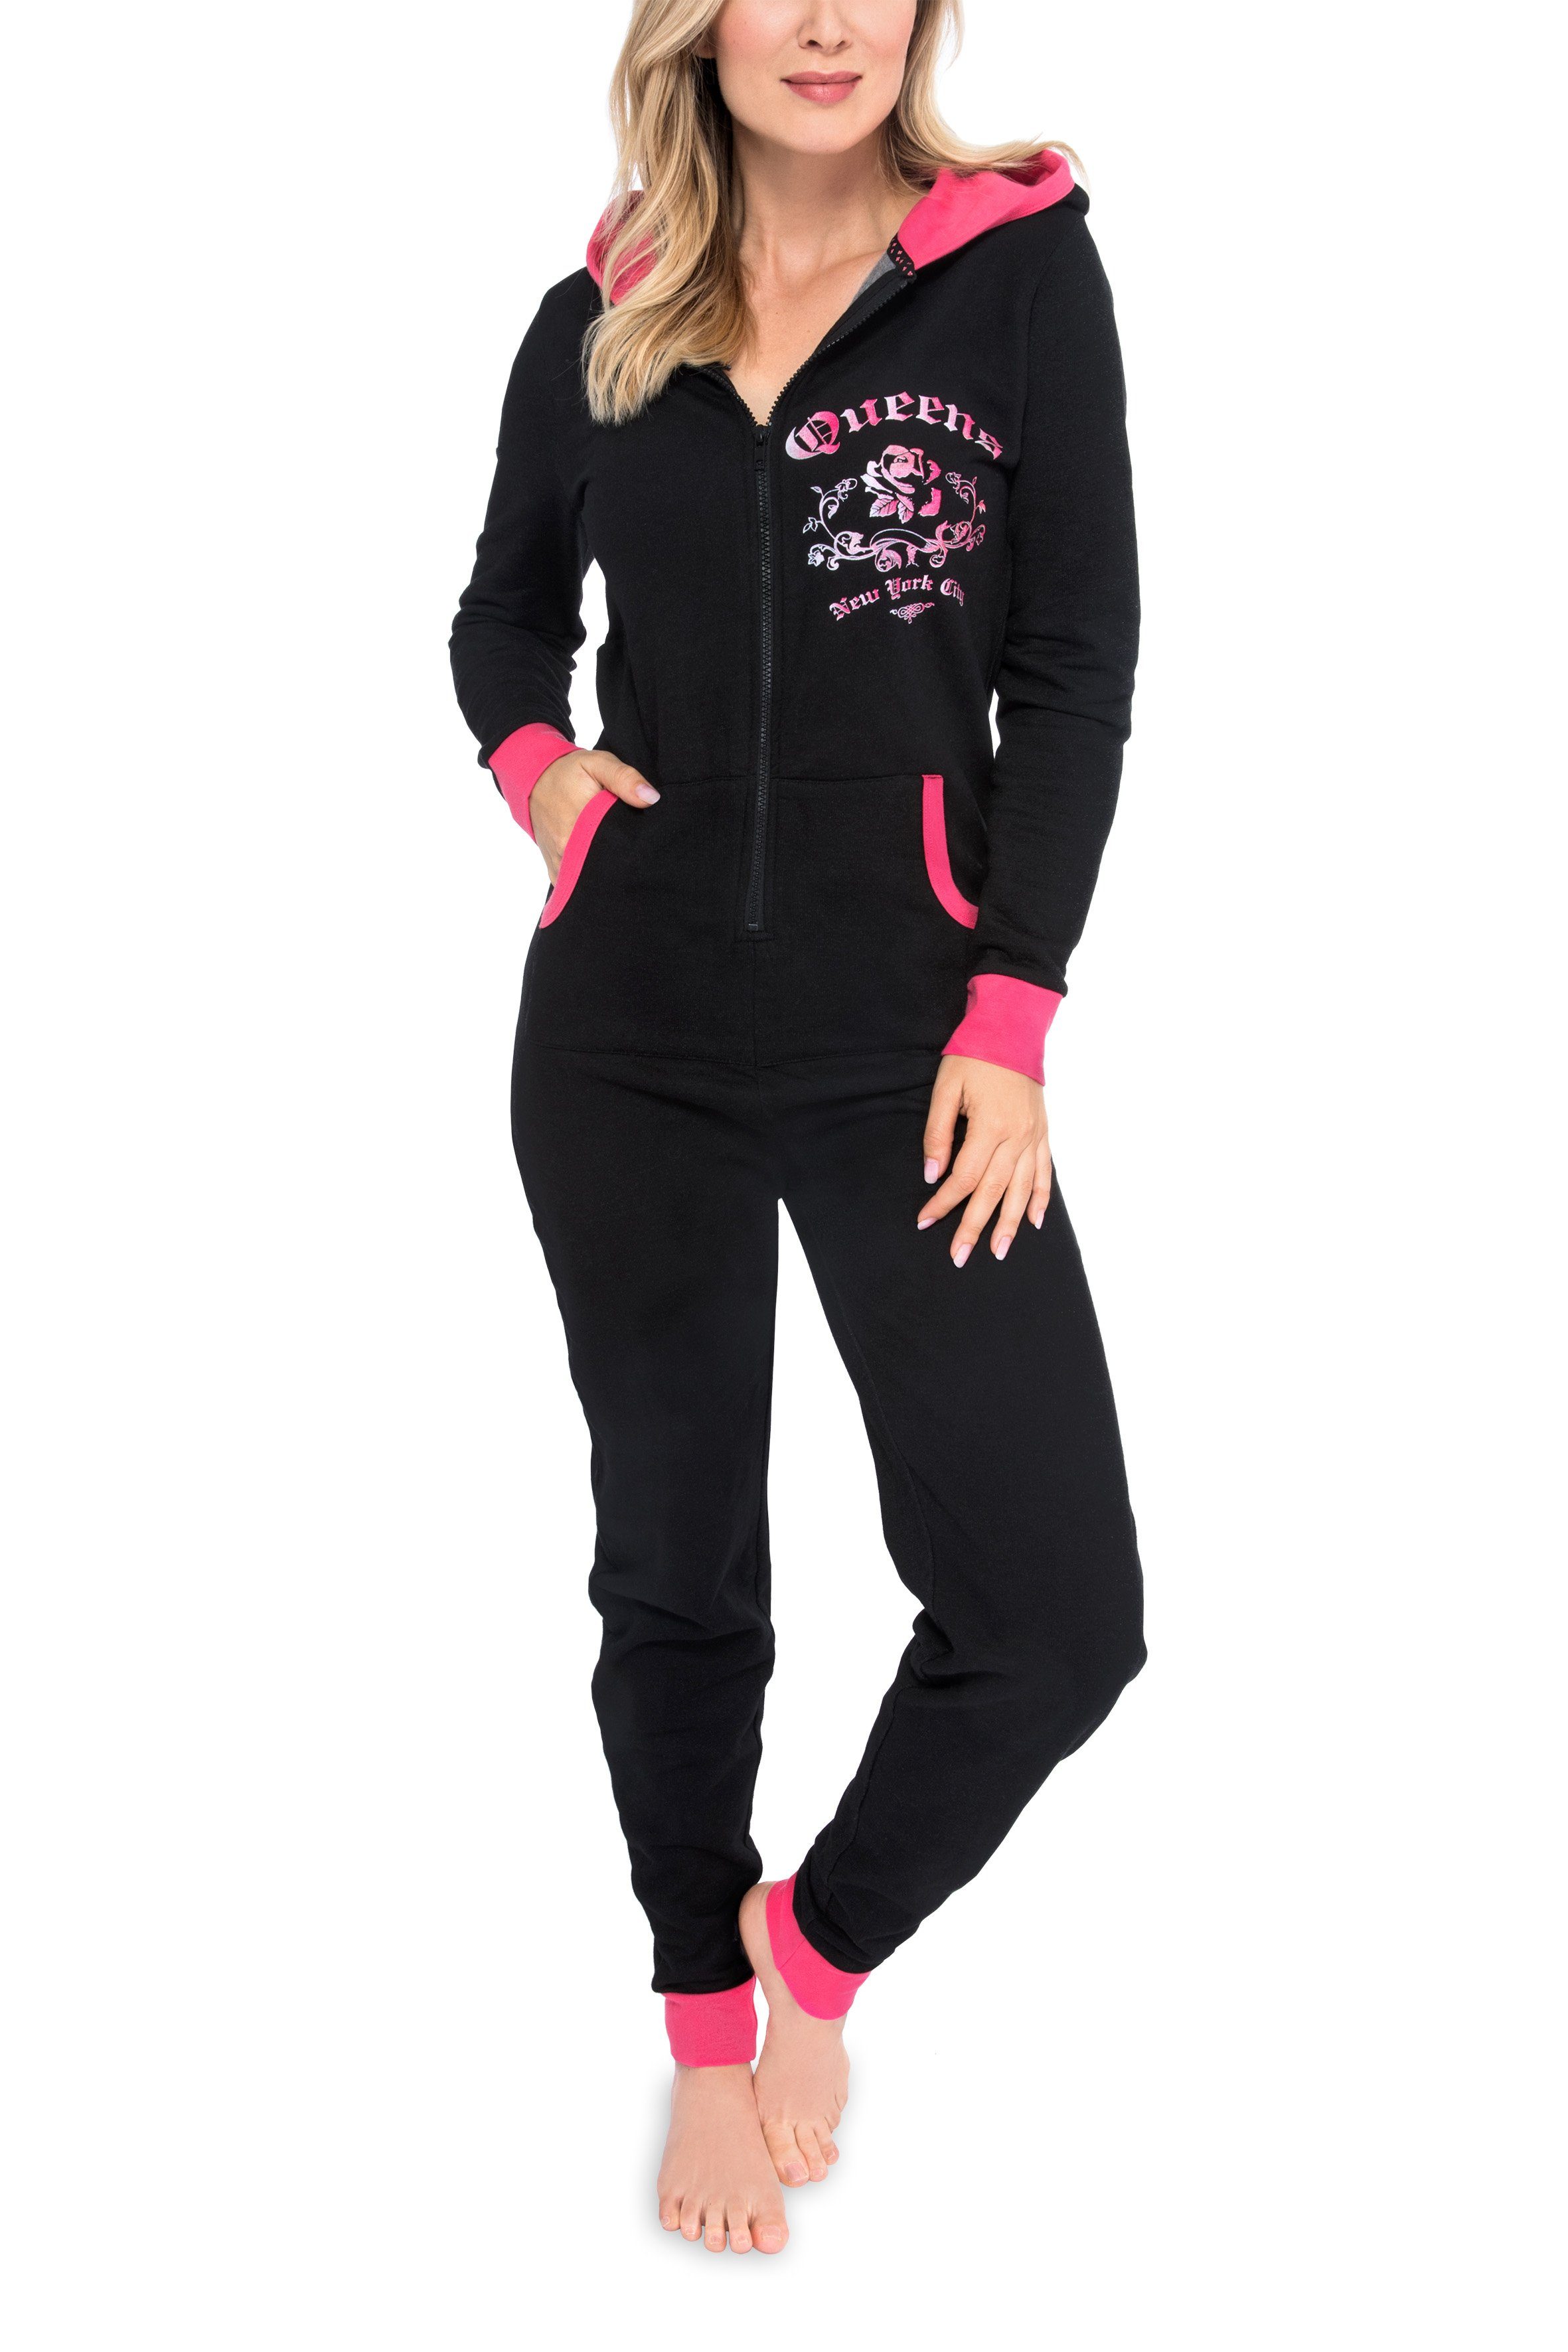 maluuna Overall maluuna Damen Jumpsuit Onesie Jogger Hausanzug Overall in  hochwertiger Sweater-Qualität online kaufen | OTTO